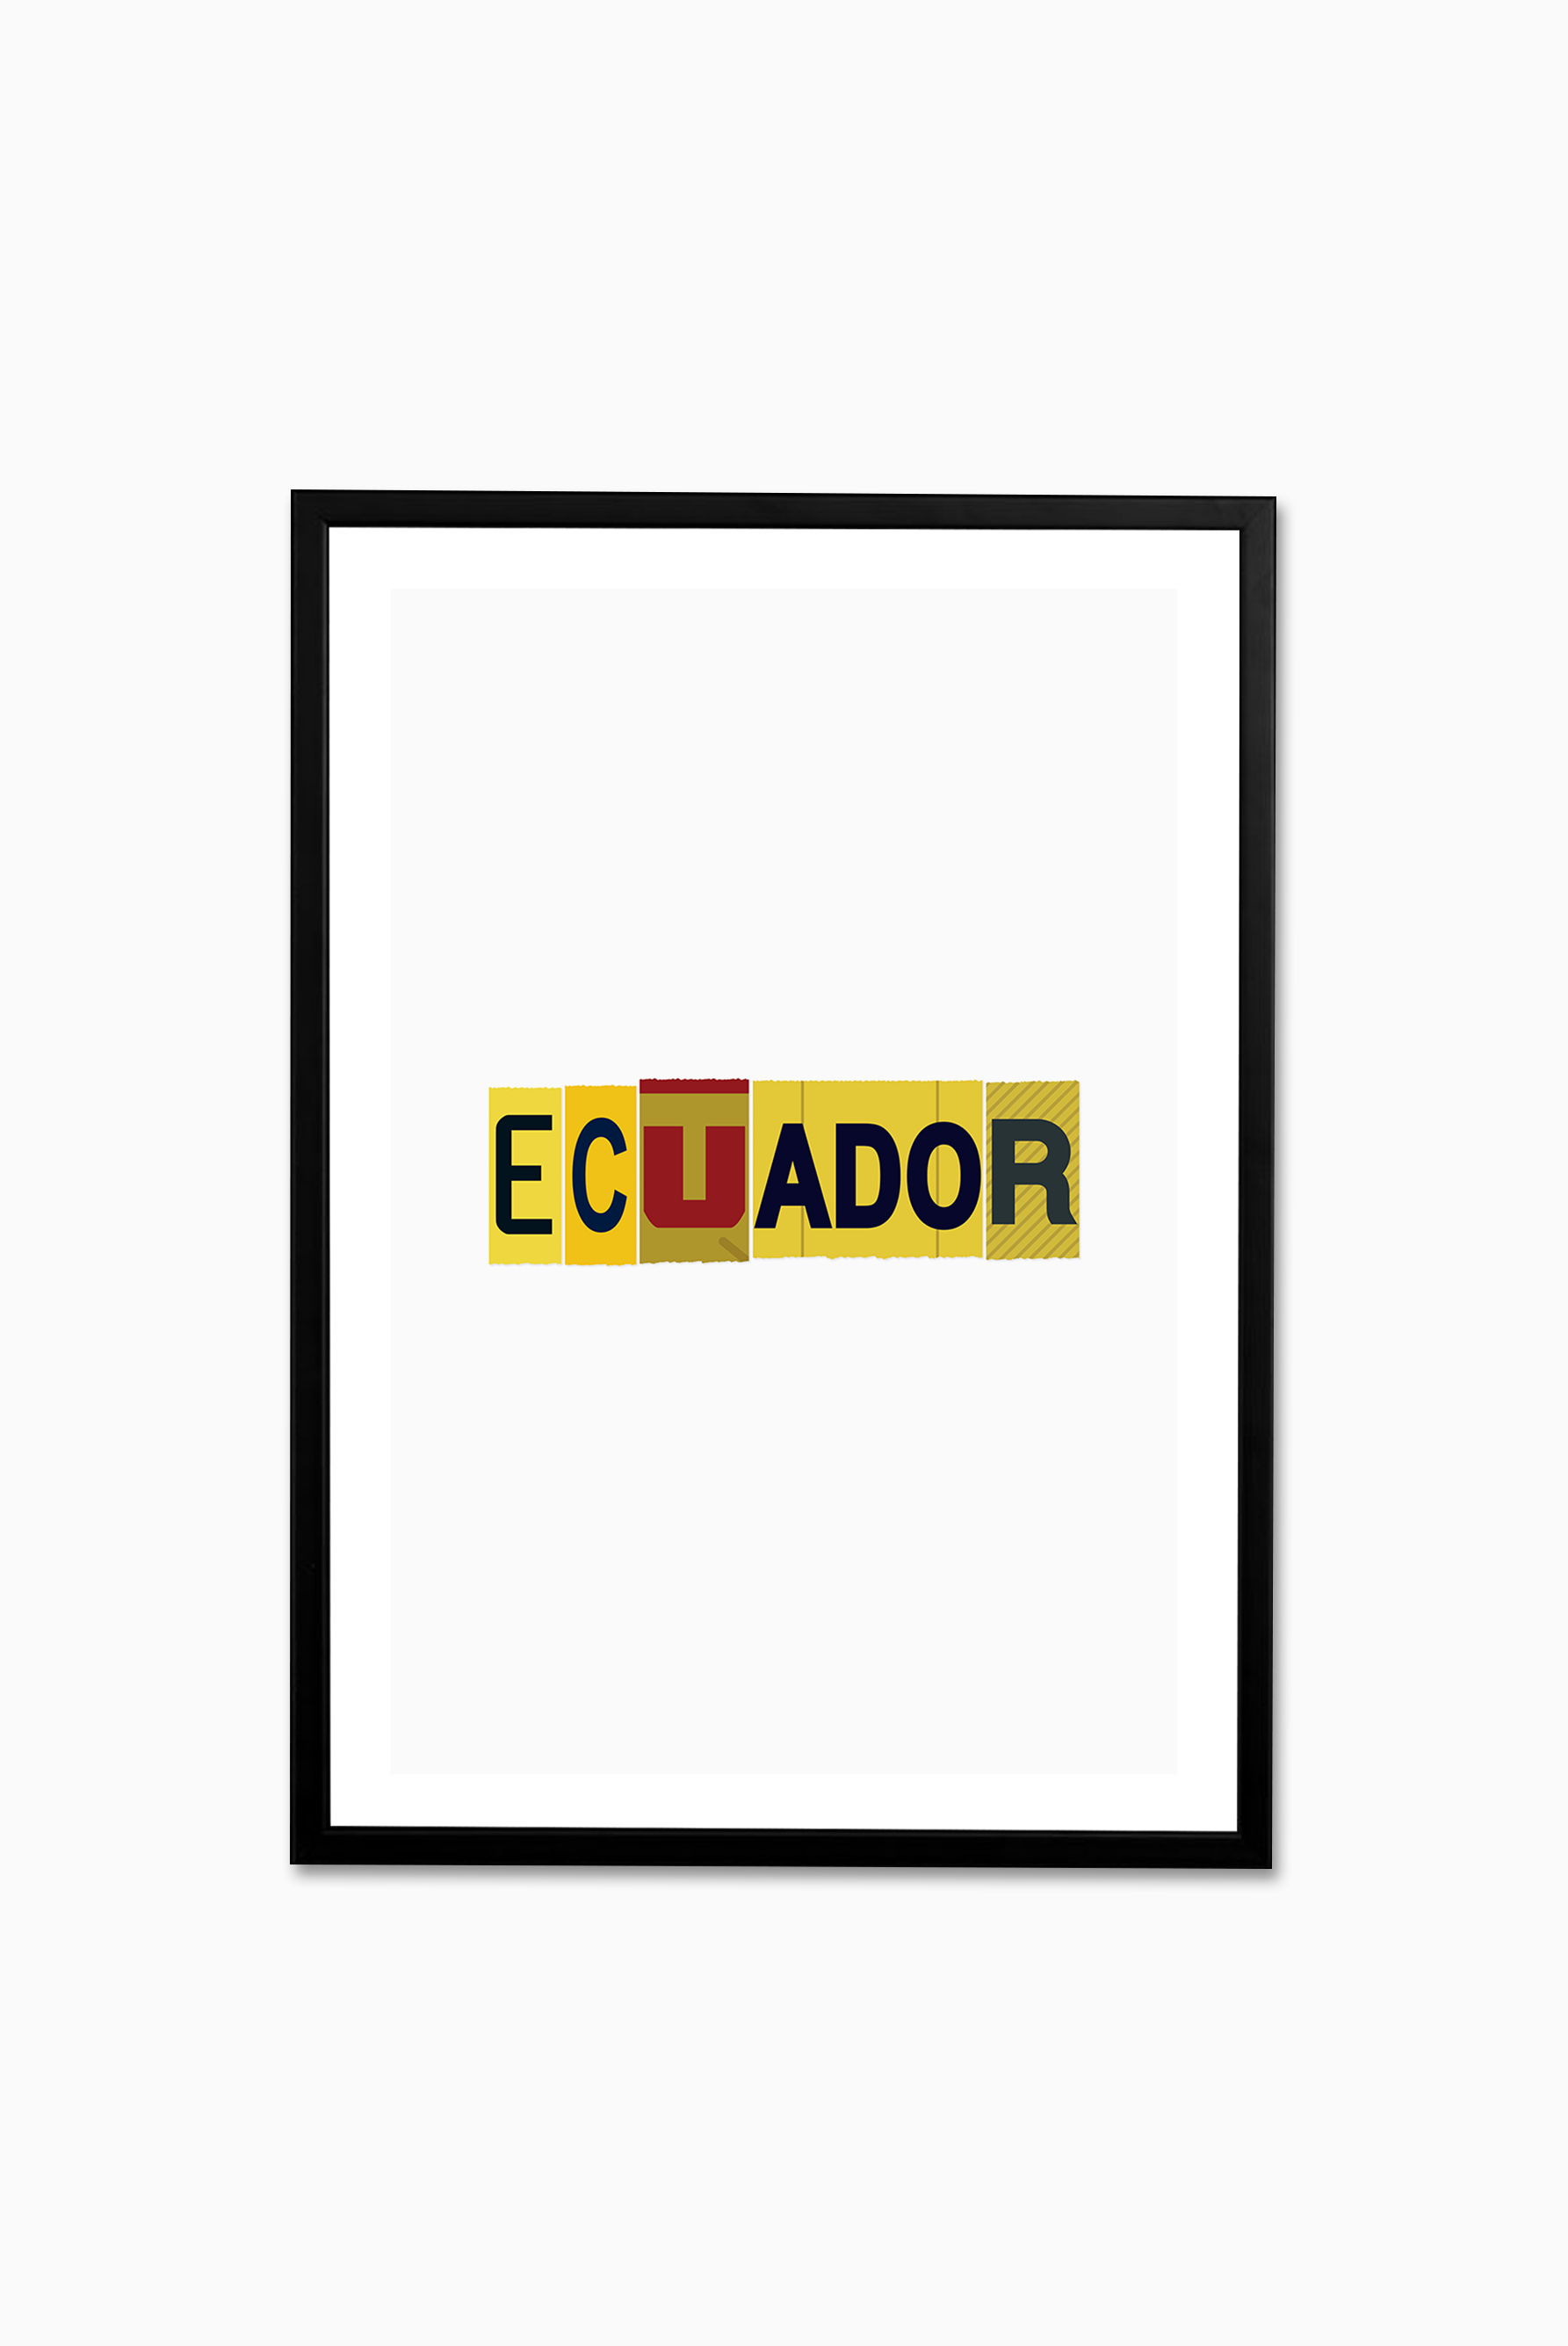 Ecuador Wear and Tear / Print